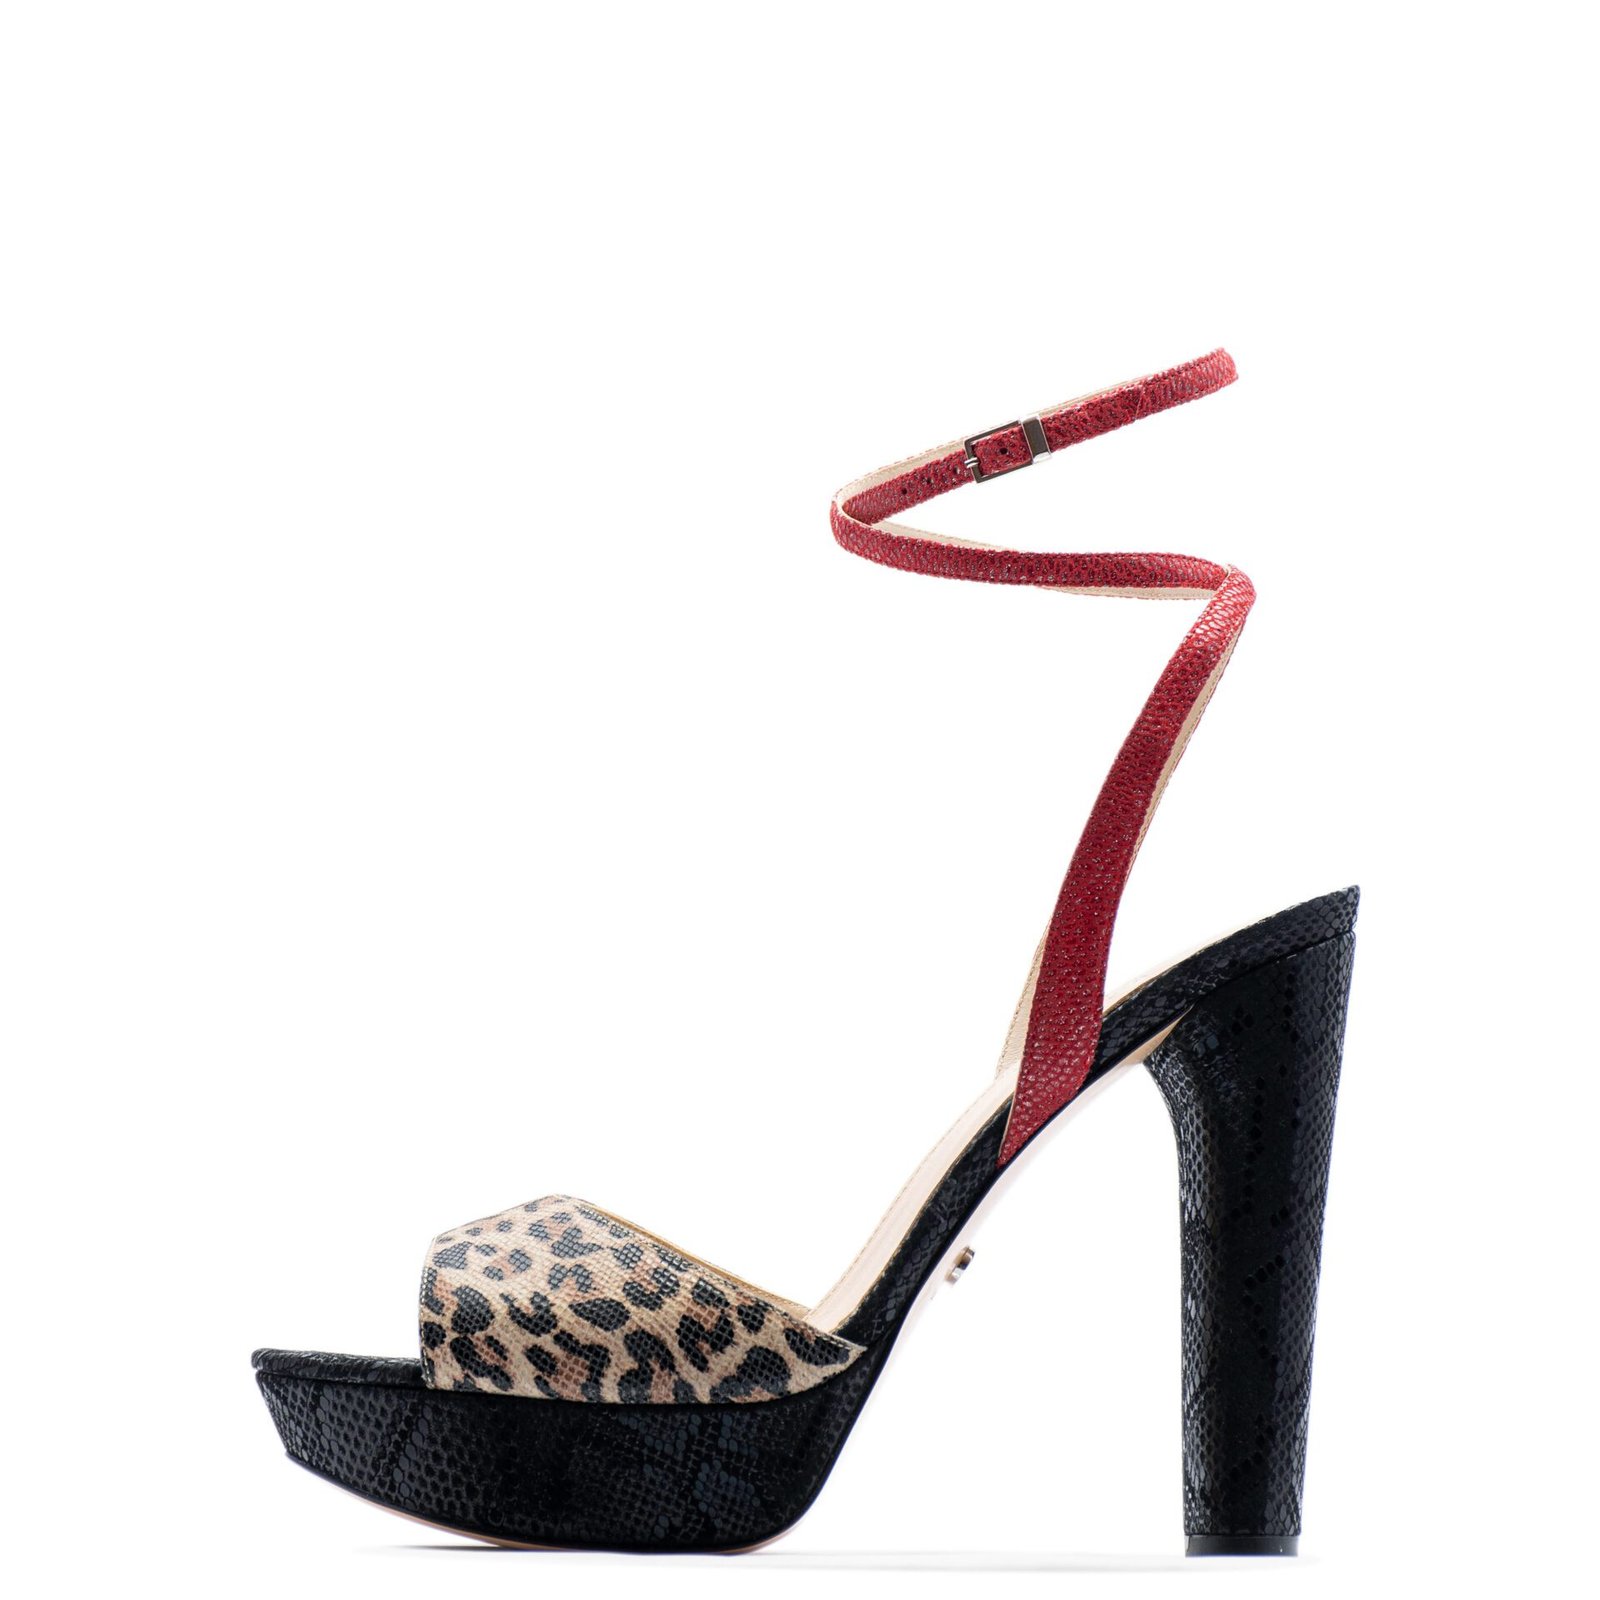 Red Leopard Satin Shoes Open Toe Crossed Front Zip Back Leopard Sole 4' Heel 